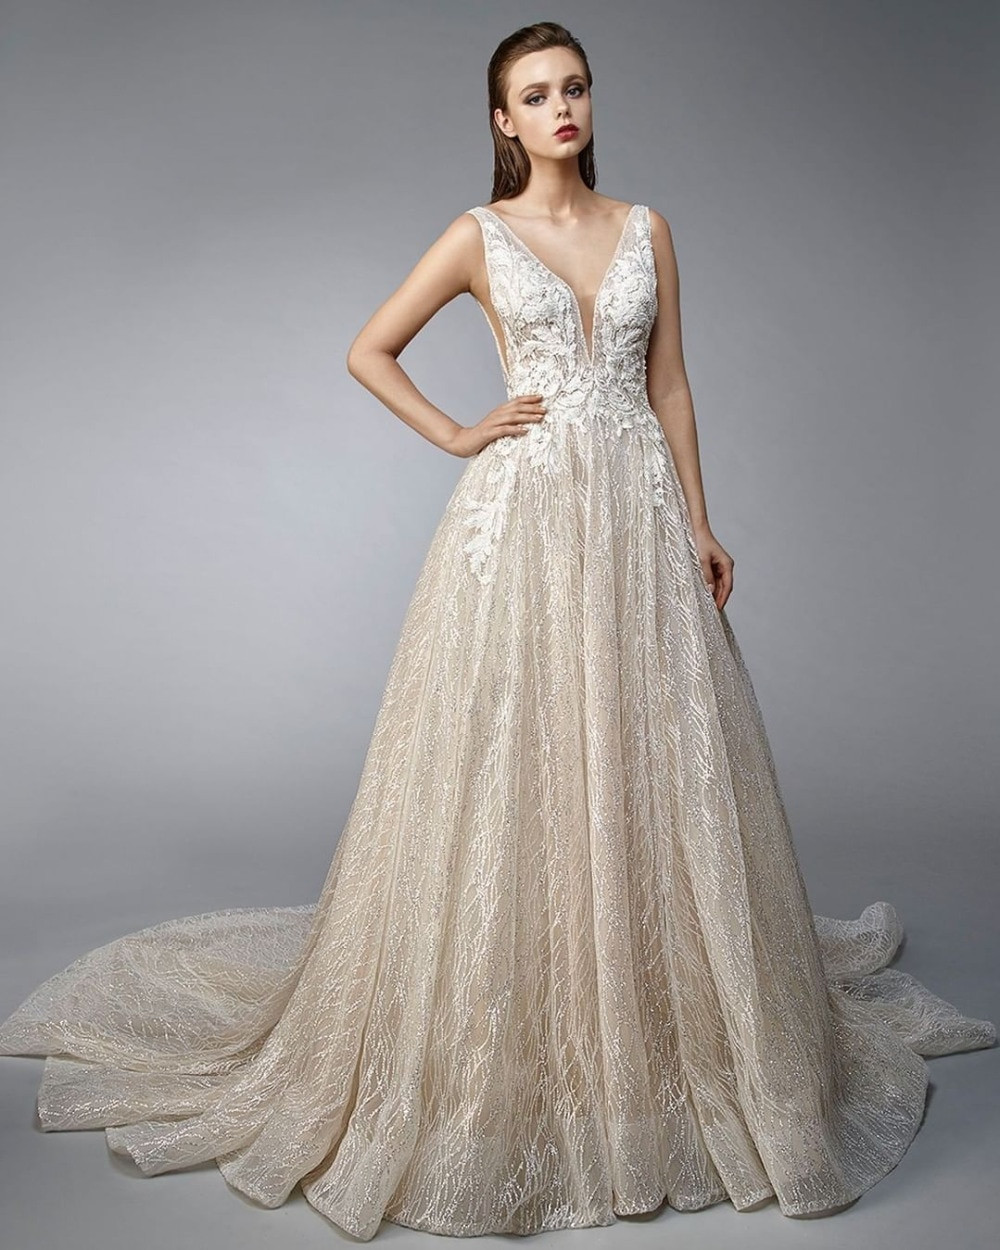 Deep V Wedding Dress
 Eslieb High quality High end Custom made Wedding Dresses Luxury Deep V neck wedding Dress 2019